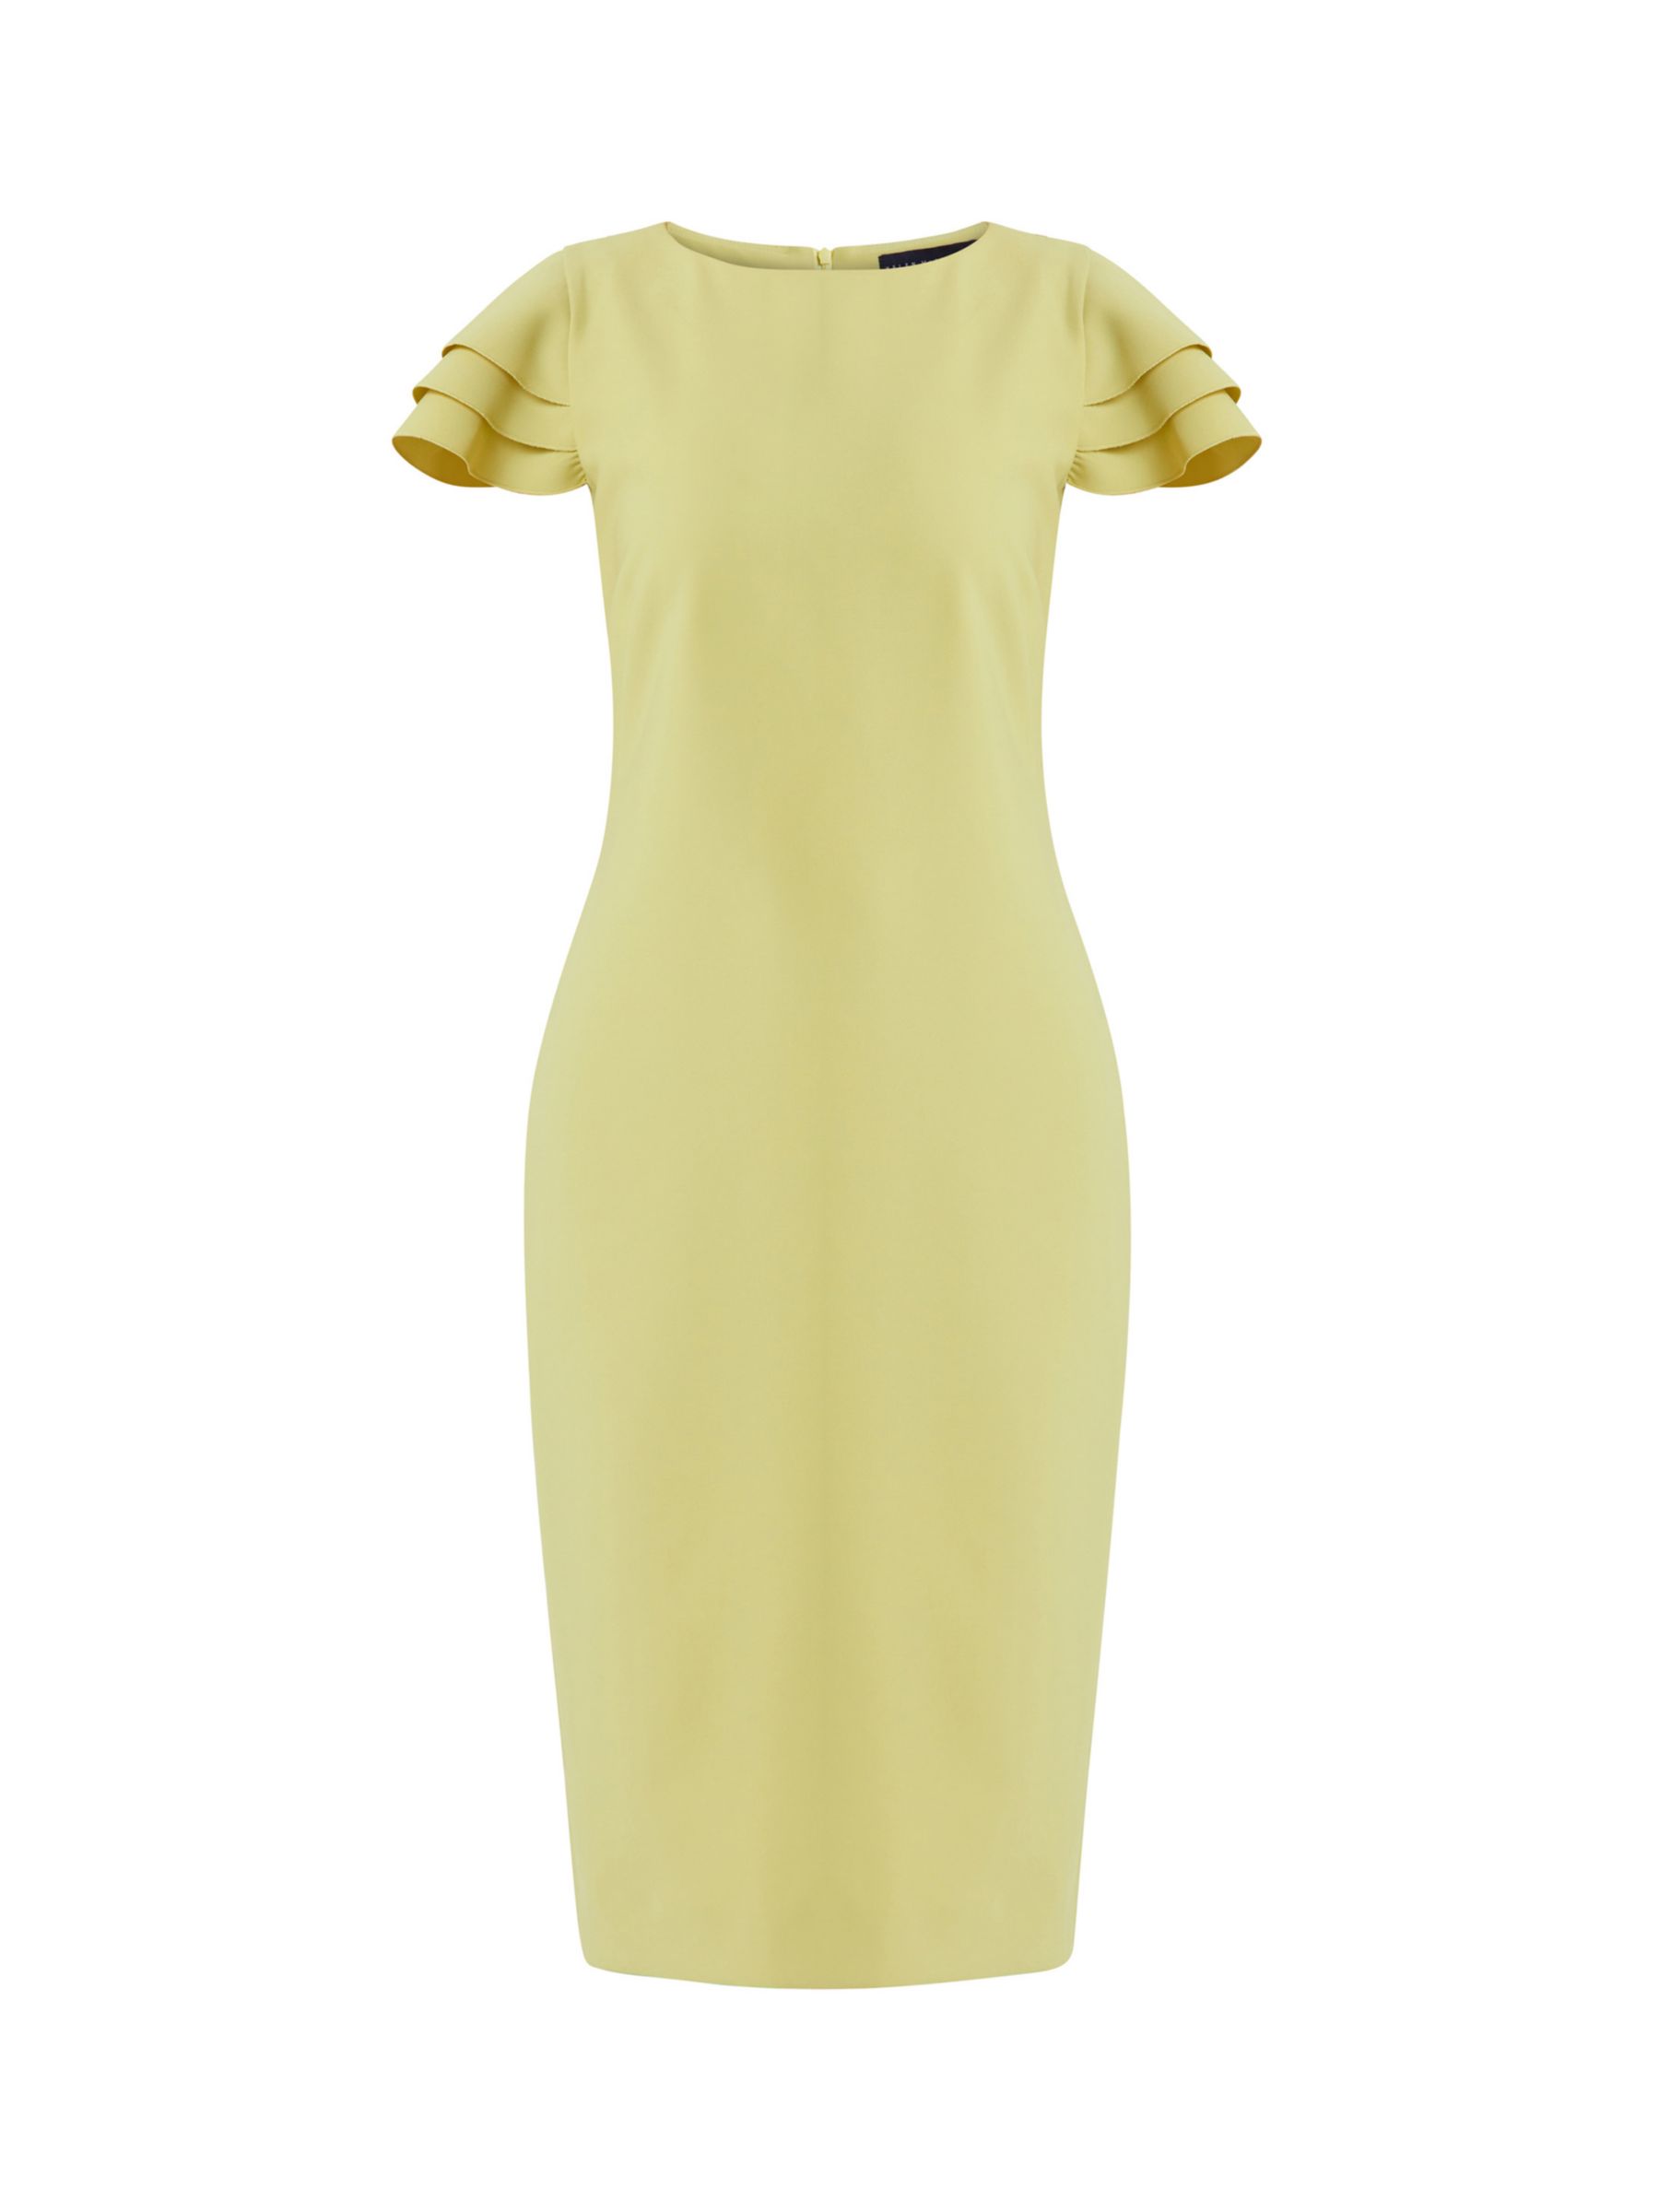 Helen McAlinden Penny Shift Dress, Citrus Yellow at John Lewis & Partners